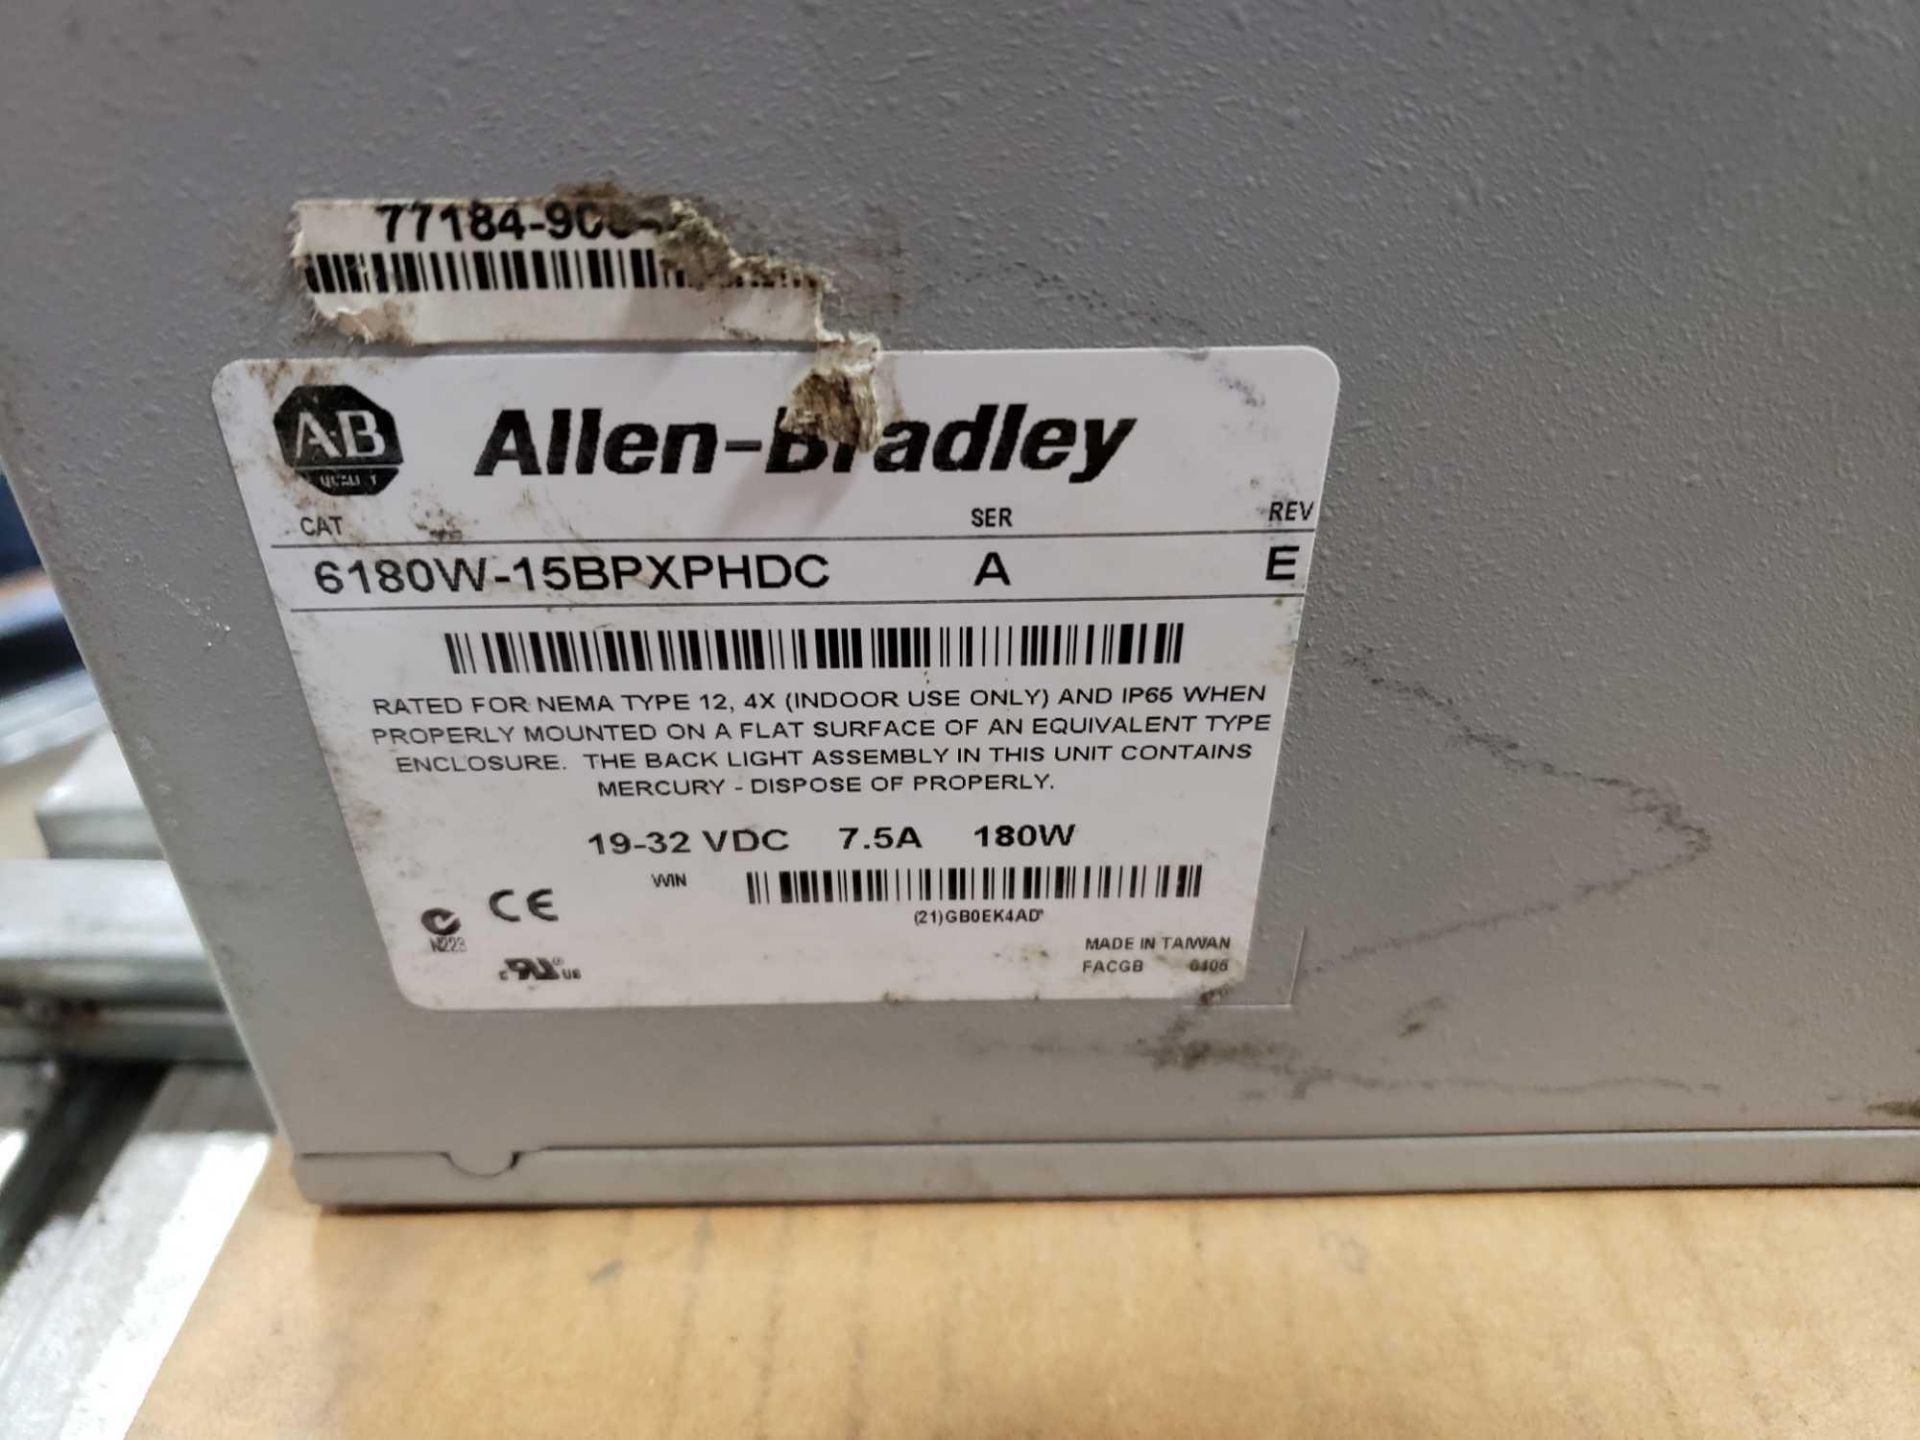 Allen Bradley Versaview 1500W catalog 6180W-15BPXPHDC user control interface. - Image 2 of 2